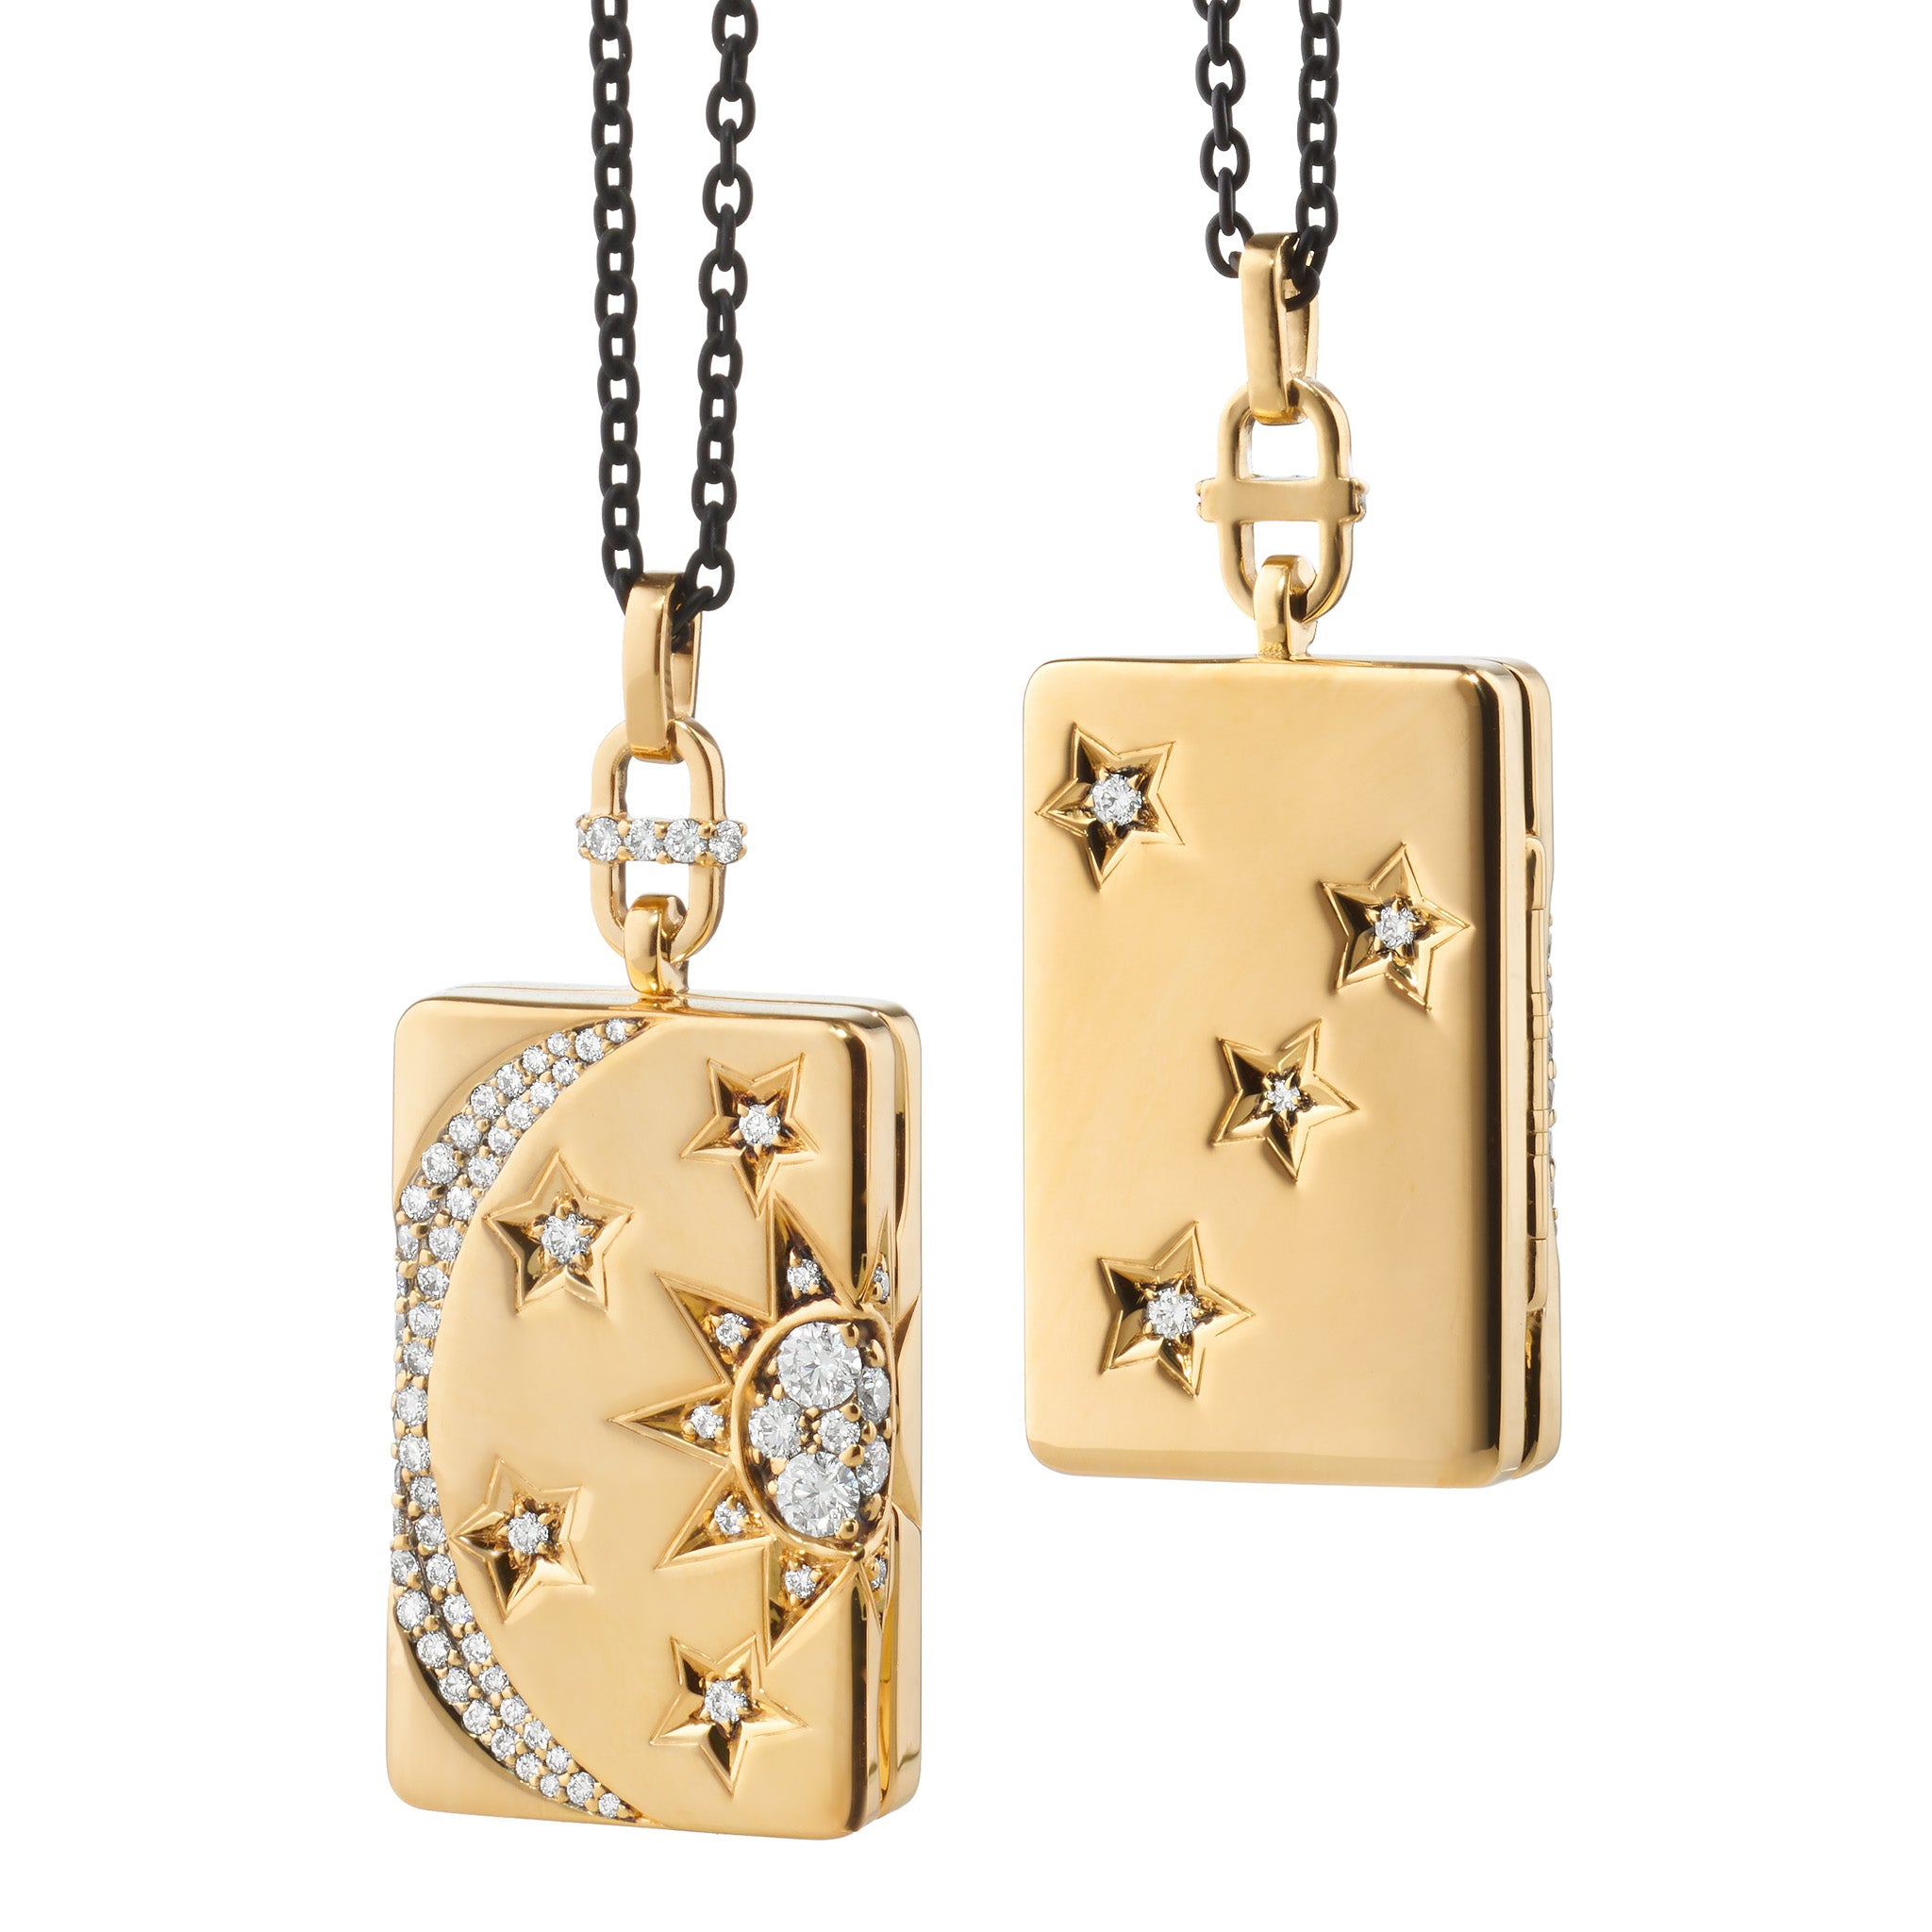 Louis Vuitton 18K White Gold & Diamond Heart Locket Pendant